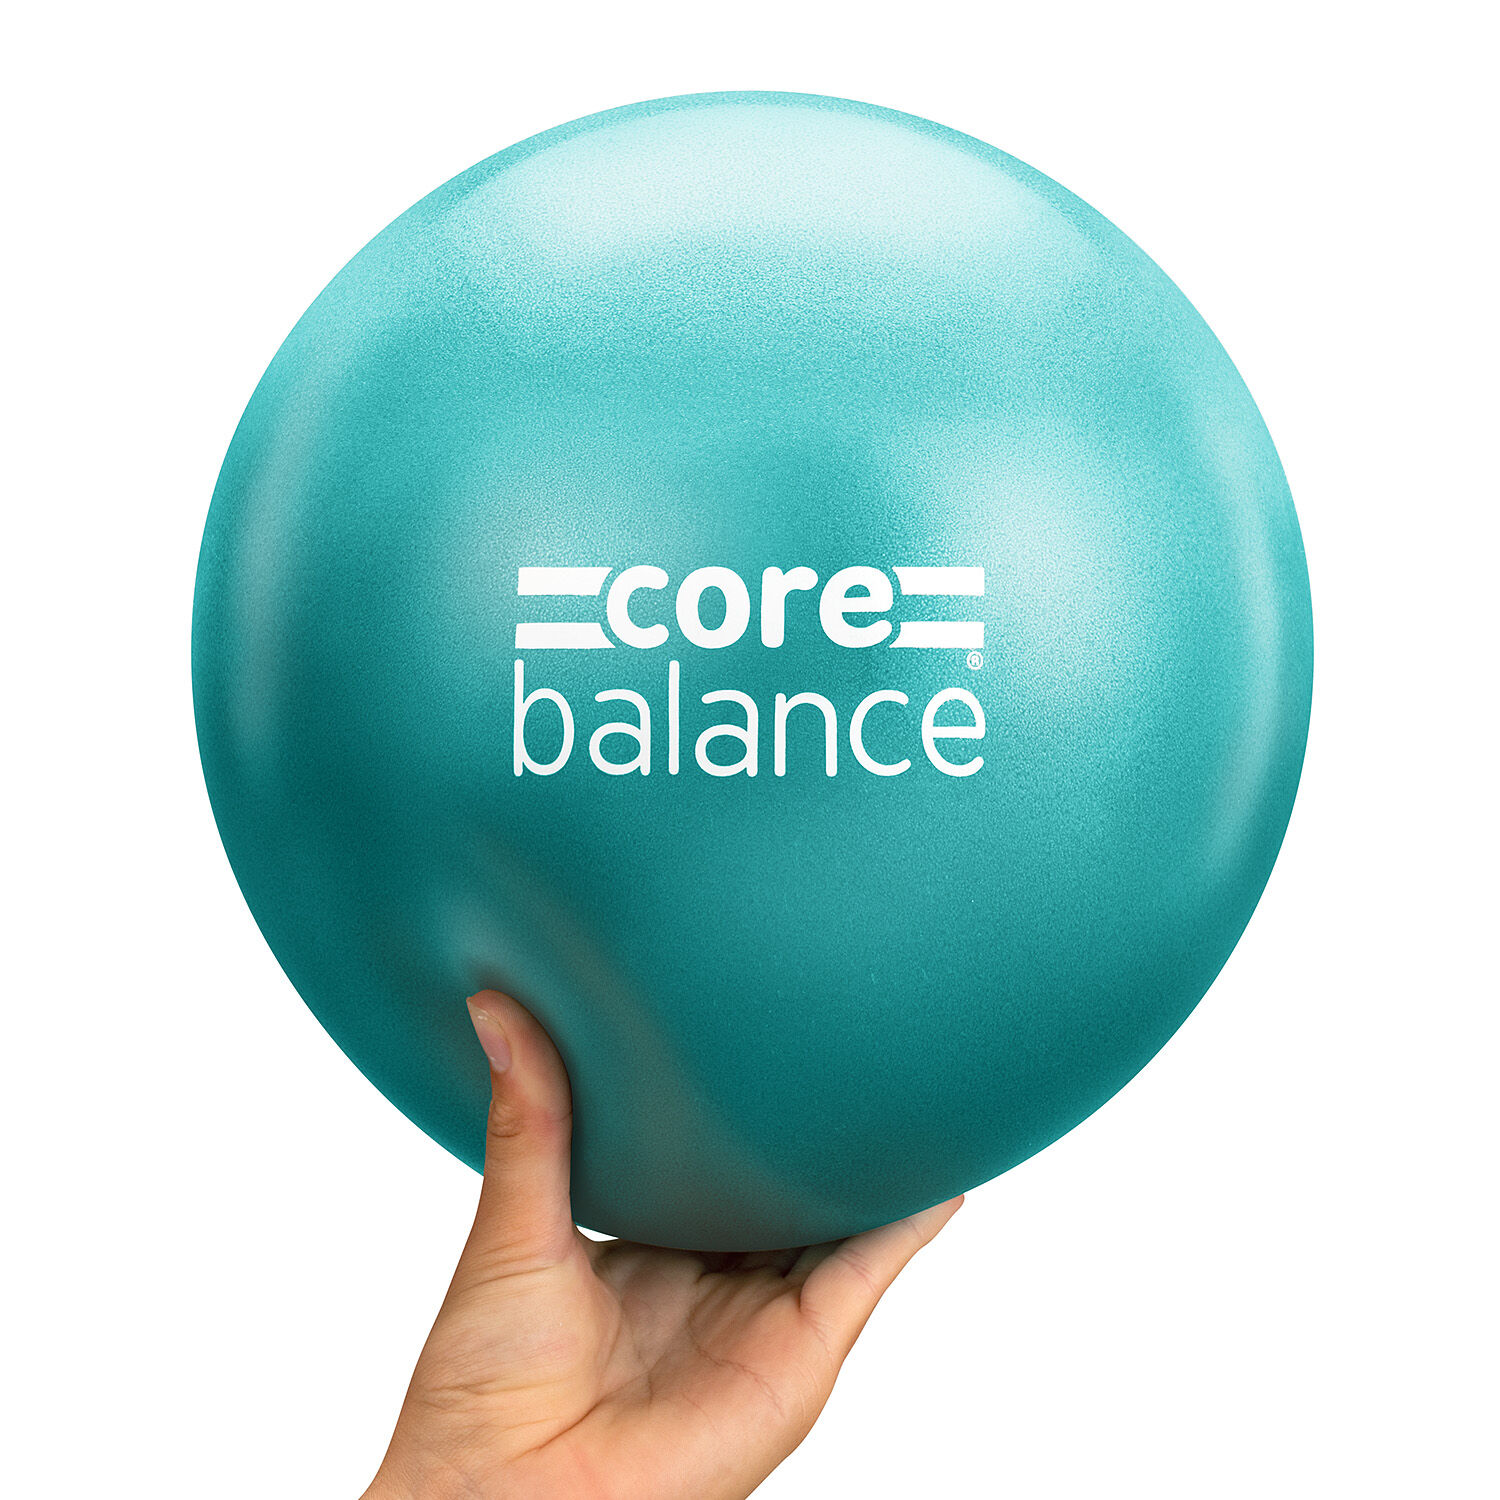 Balance Small Pilates Ball   20cm to 23cm   Soft Yoga Stability Toning Ball   Non Slip   Teal